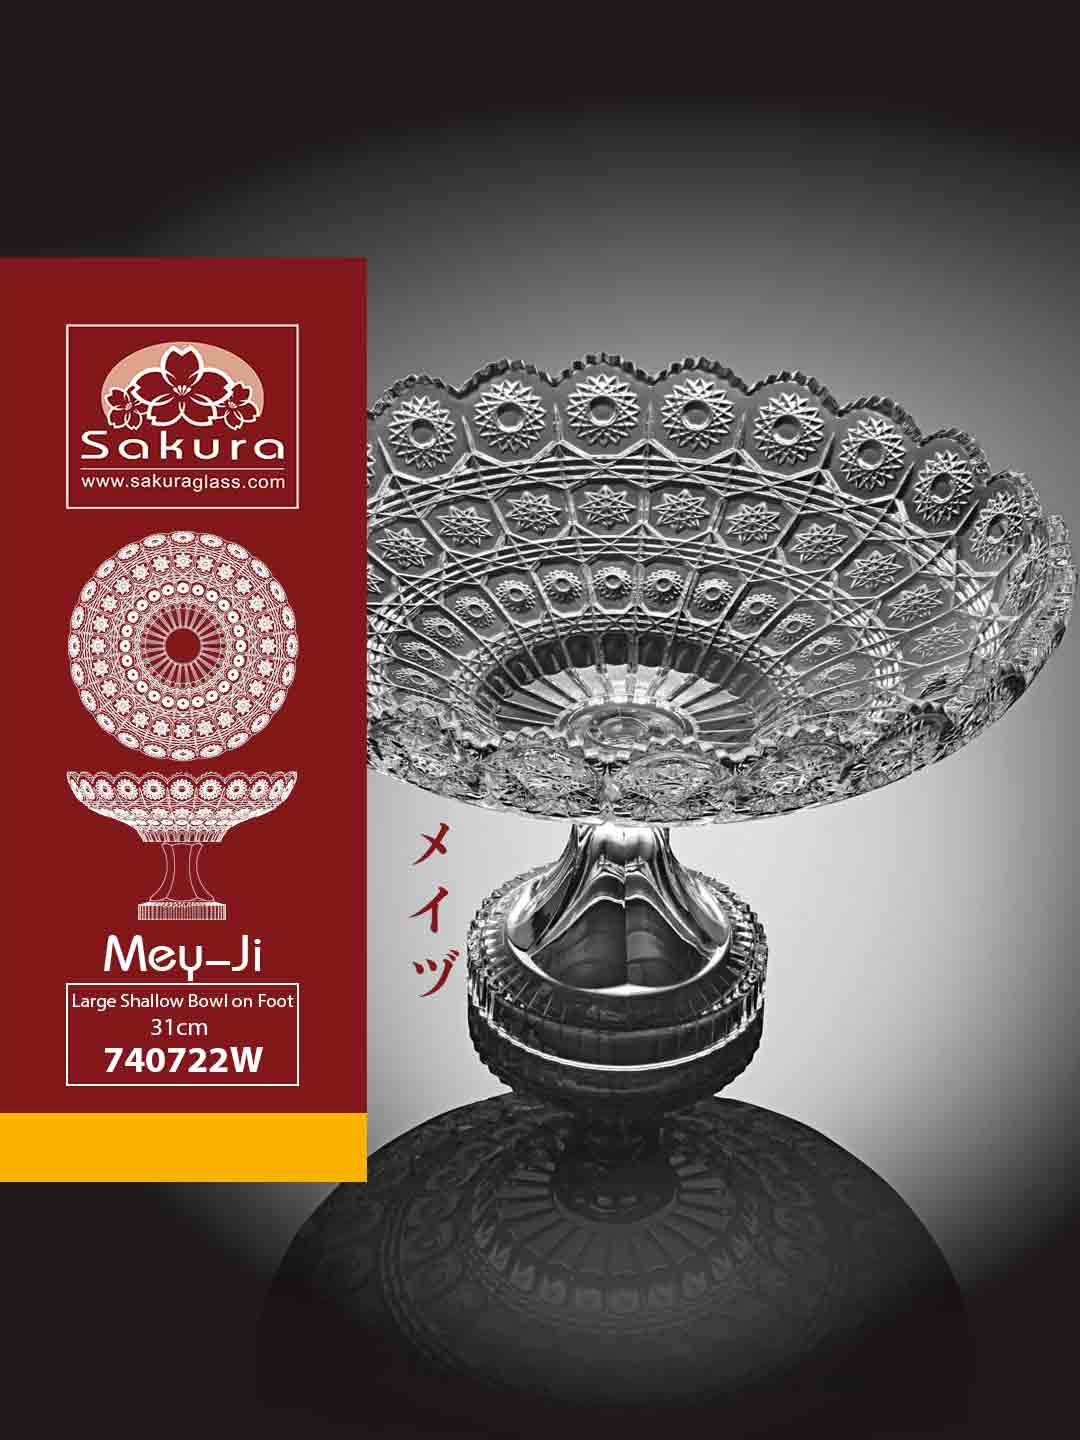 Sakura Product Mey Ji Large Shallow Bowl on Foot 31cm 740722W